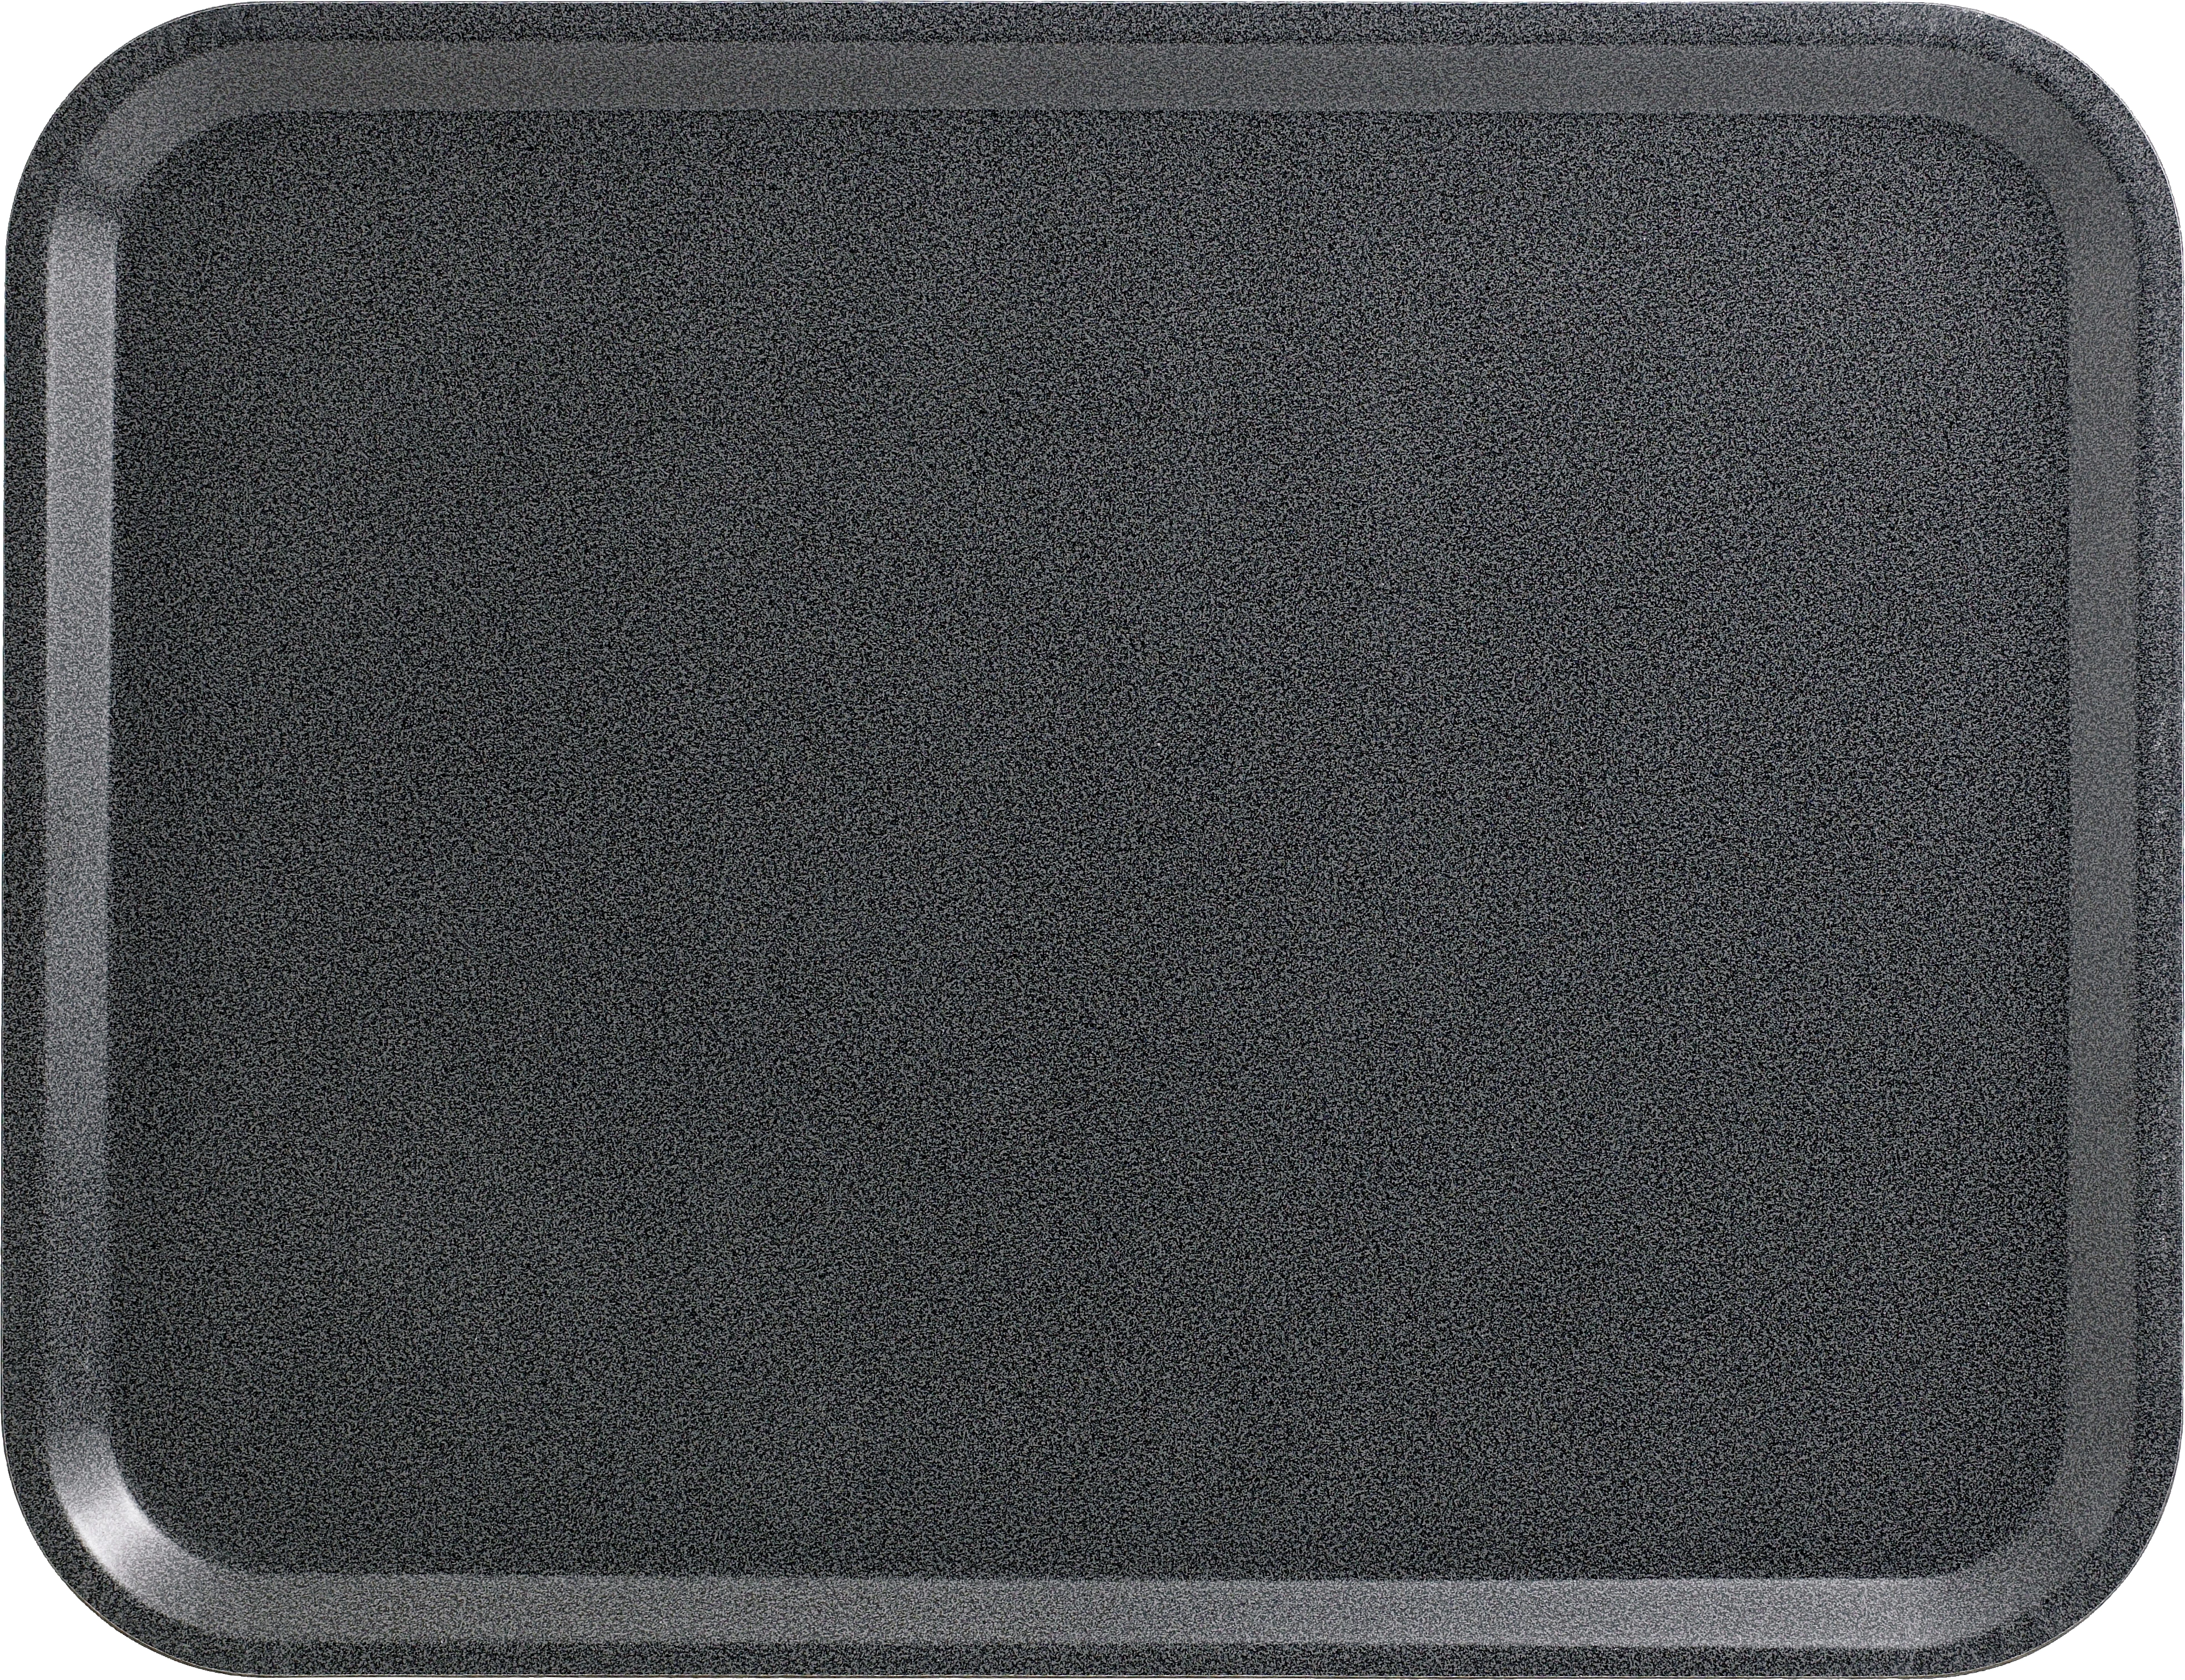 Cambro bakke, grå granit, 43 x 33 cm